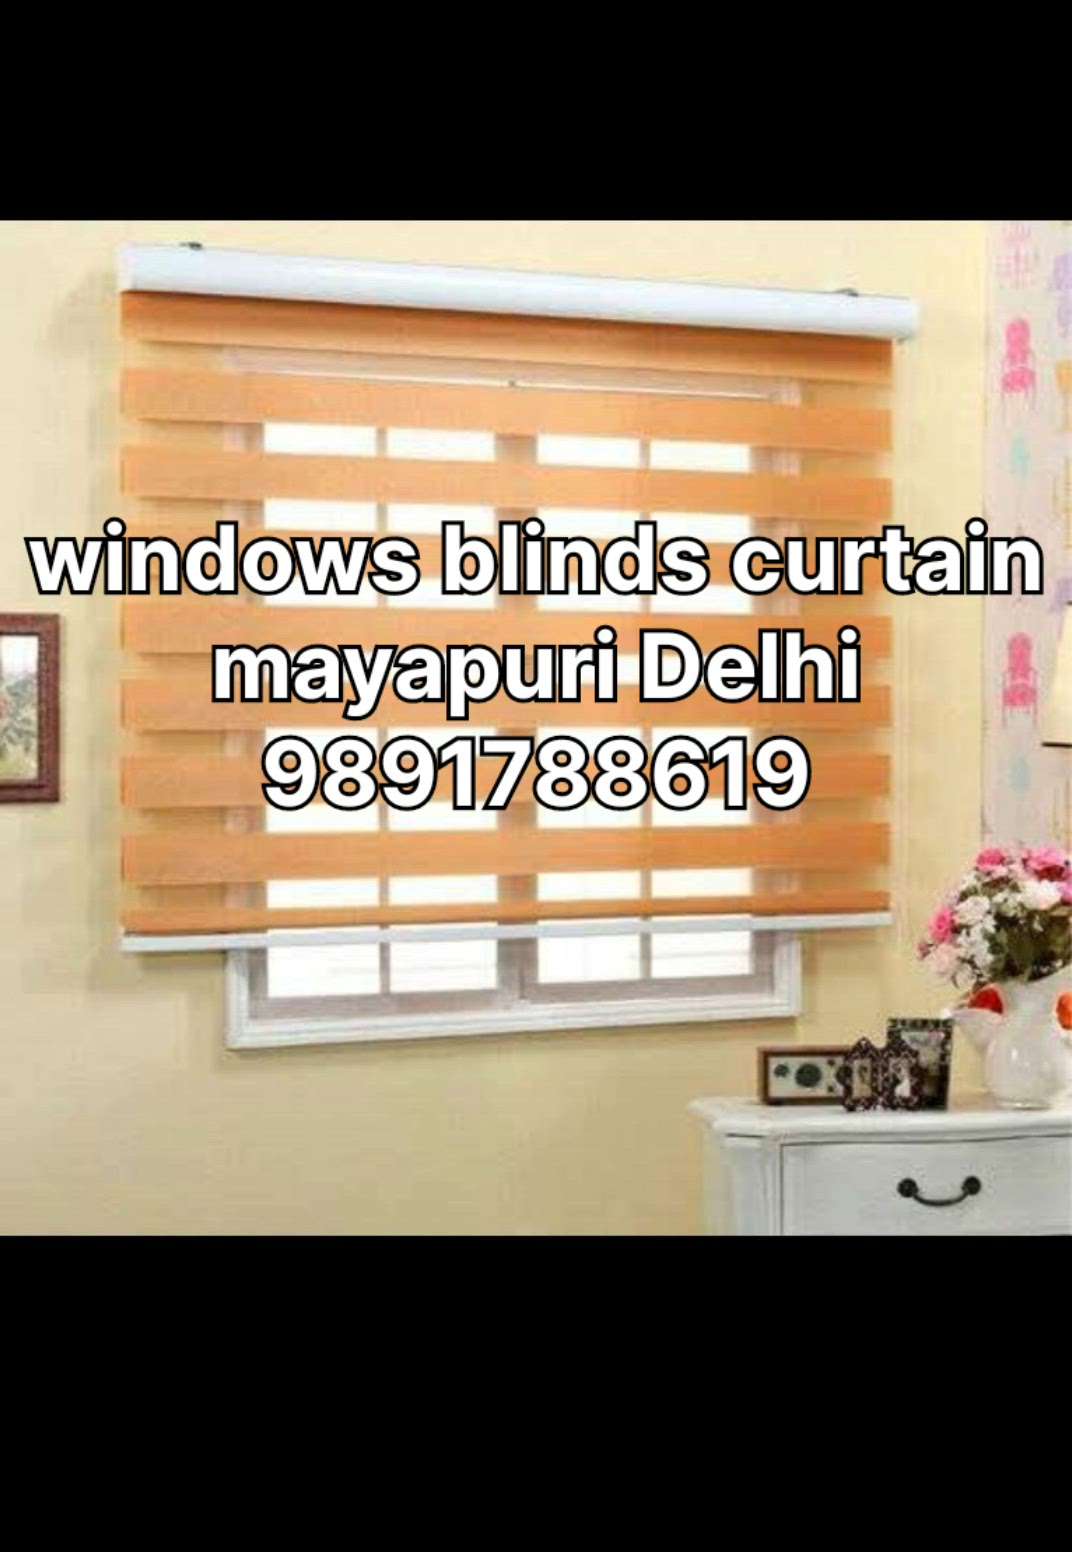 How to Master windows blinds curtain banwanyen , mayapuri Delhi
mobile no 9891788619